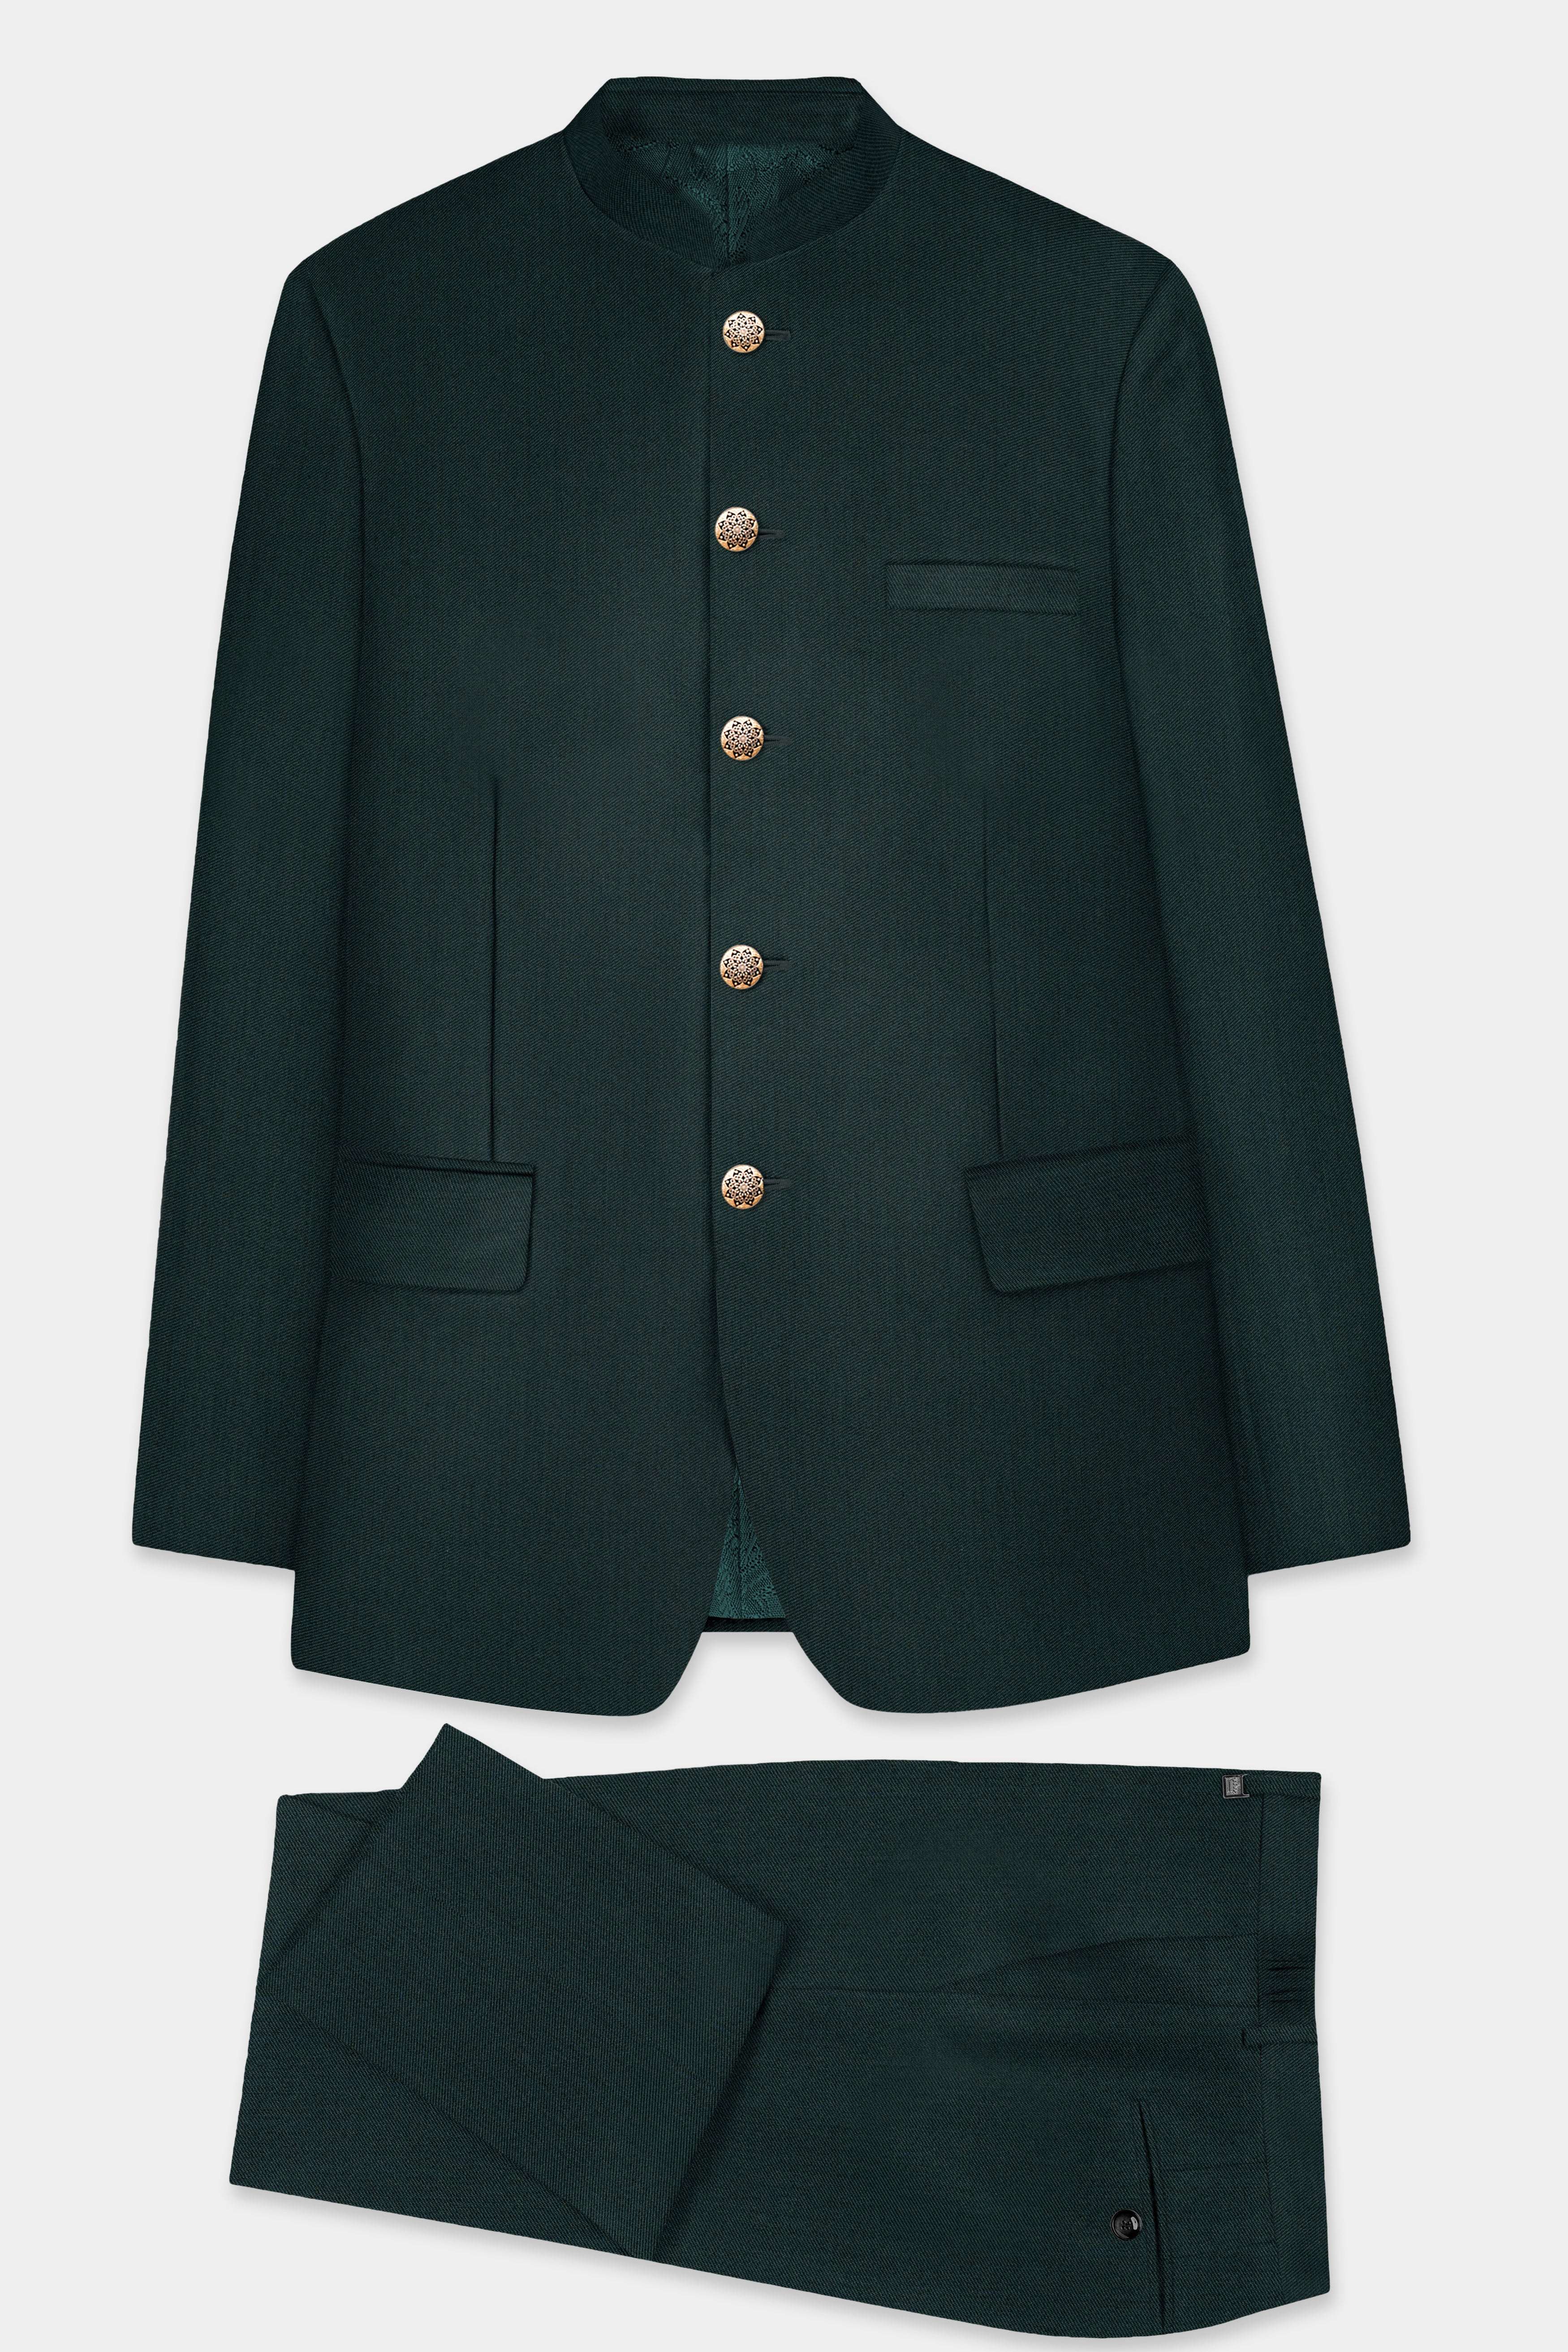 Timber Green Wool Rich Bandhgala Suit